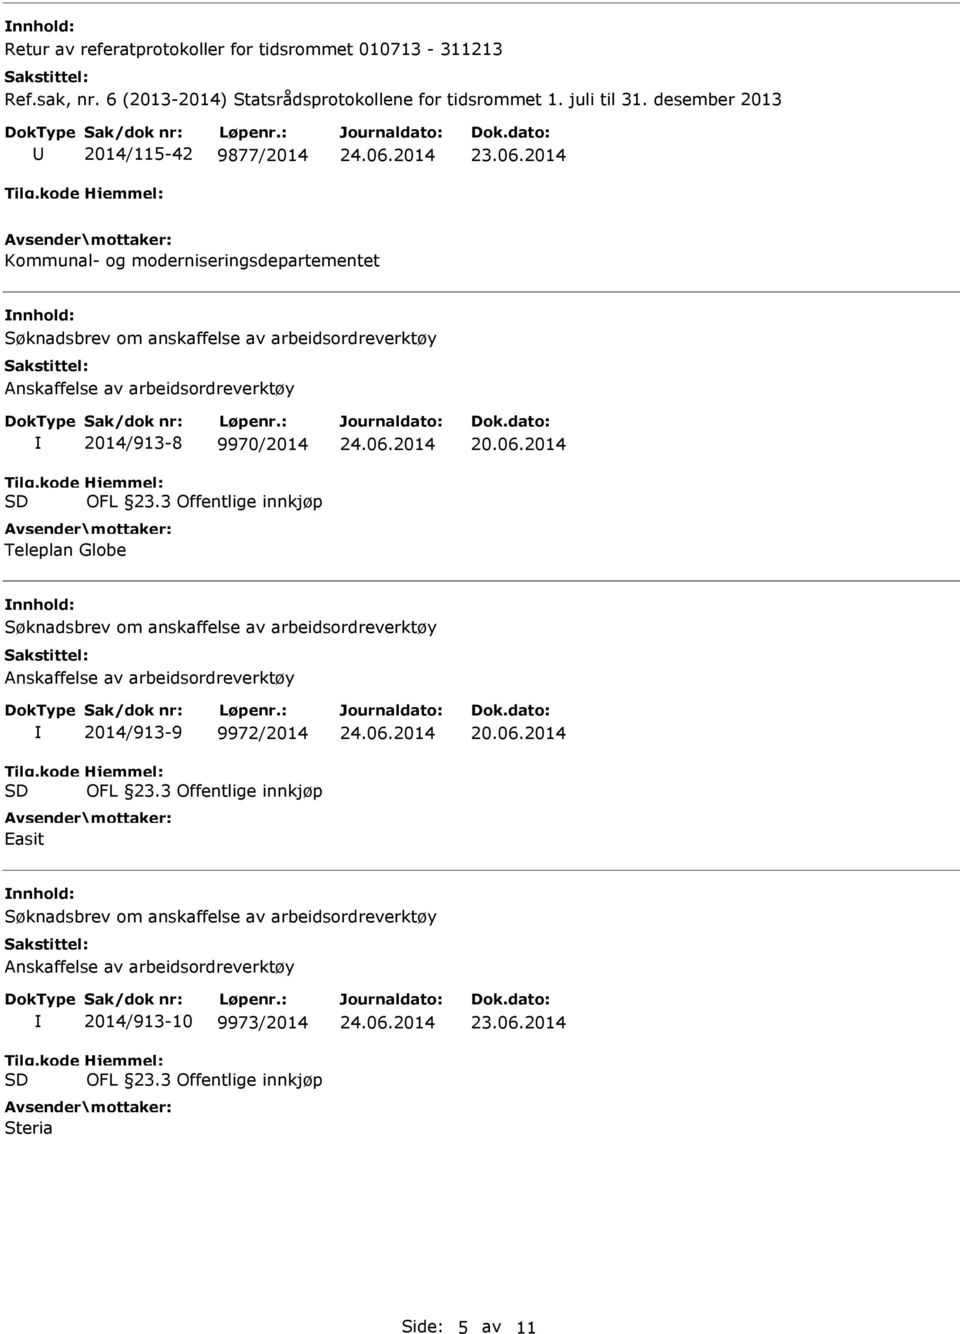 2014 Søknadsbrev om anskaffelse av arbeidsordreverktøy Anskaffelse av arbeidsordreverktøy 2014/913-9 9972/2014 OFL 23.